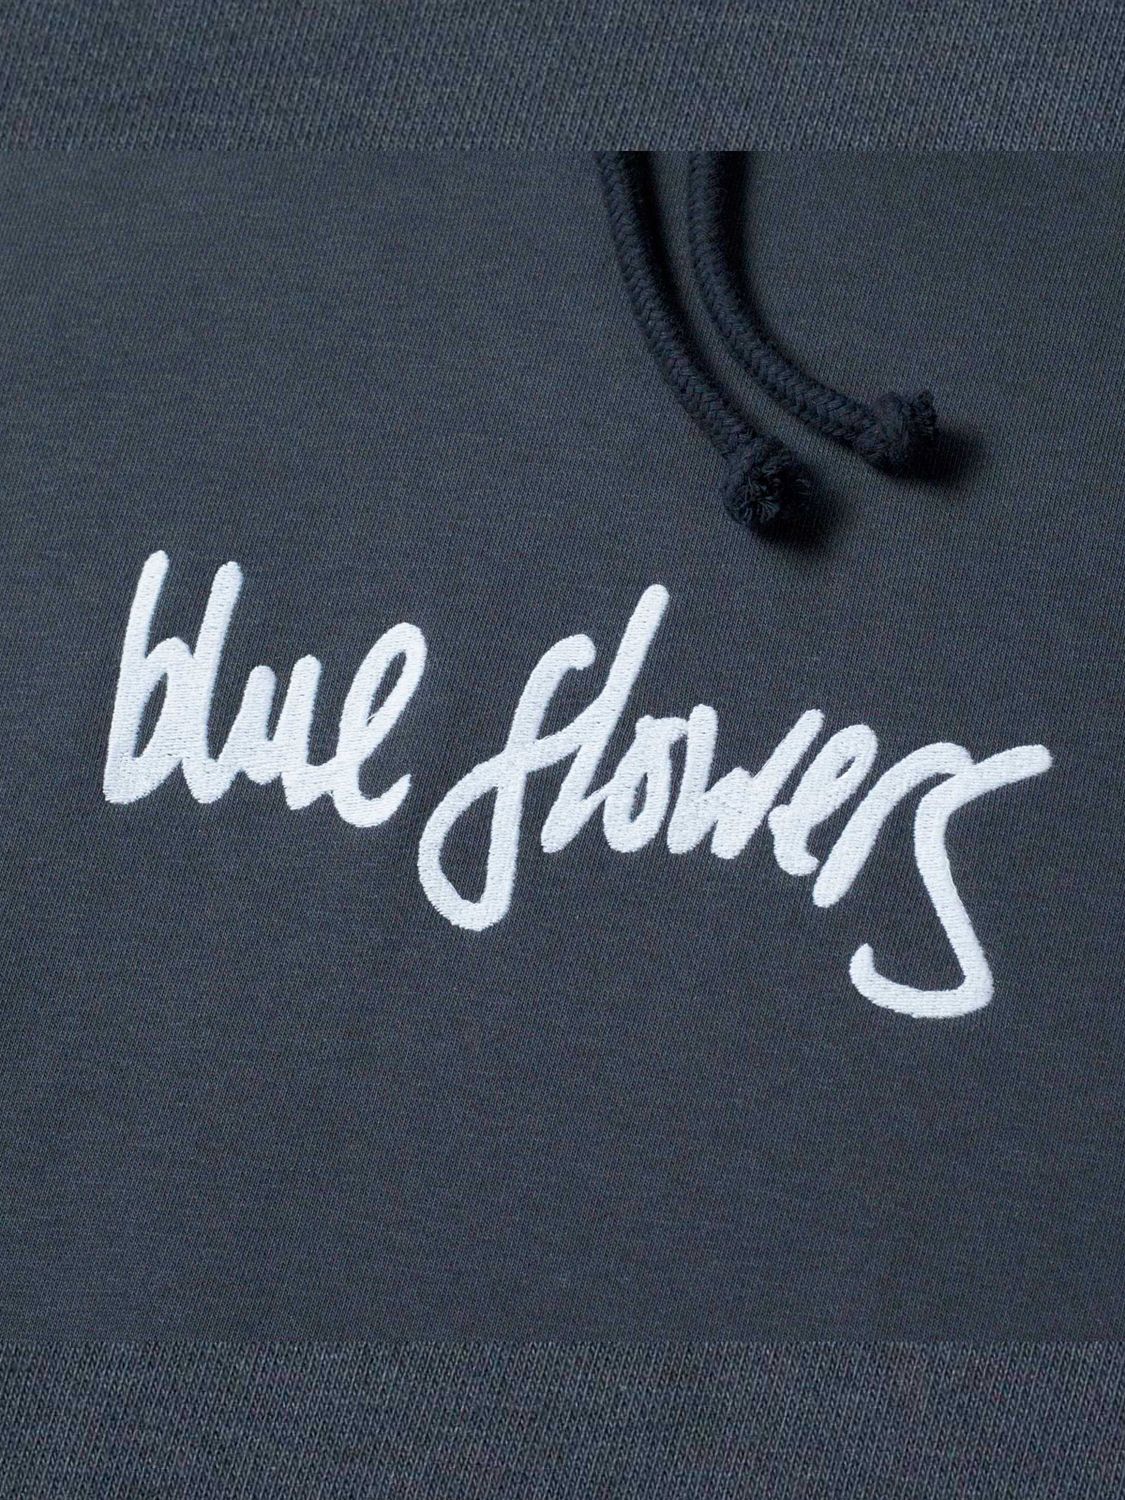 Blue Flowers Hand Written Hoodie, Dark Grey, S